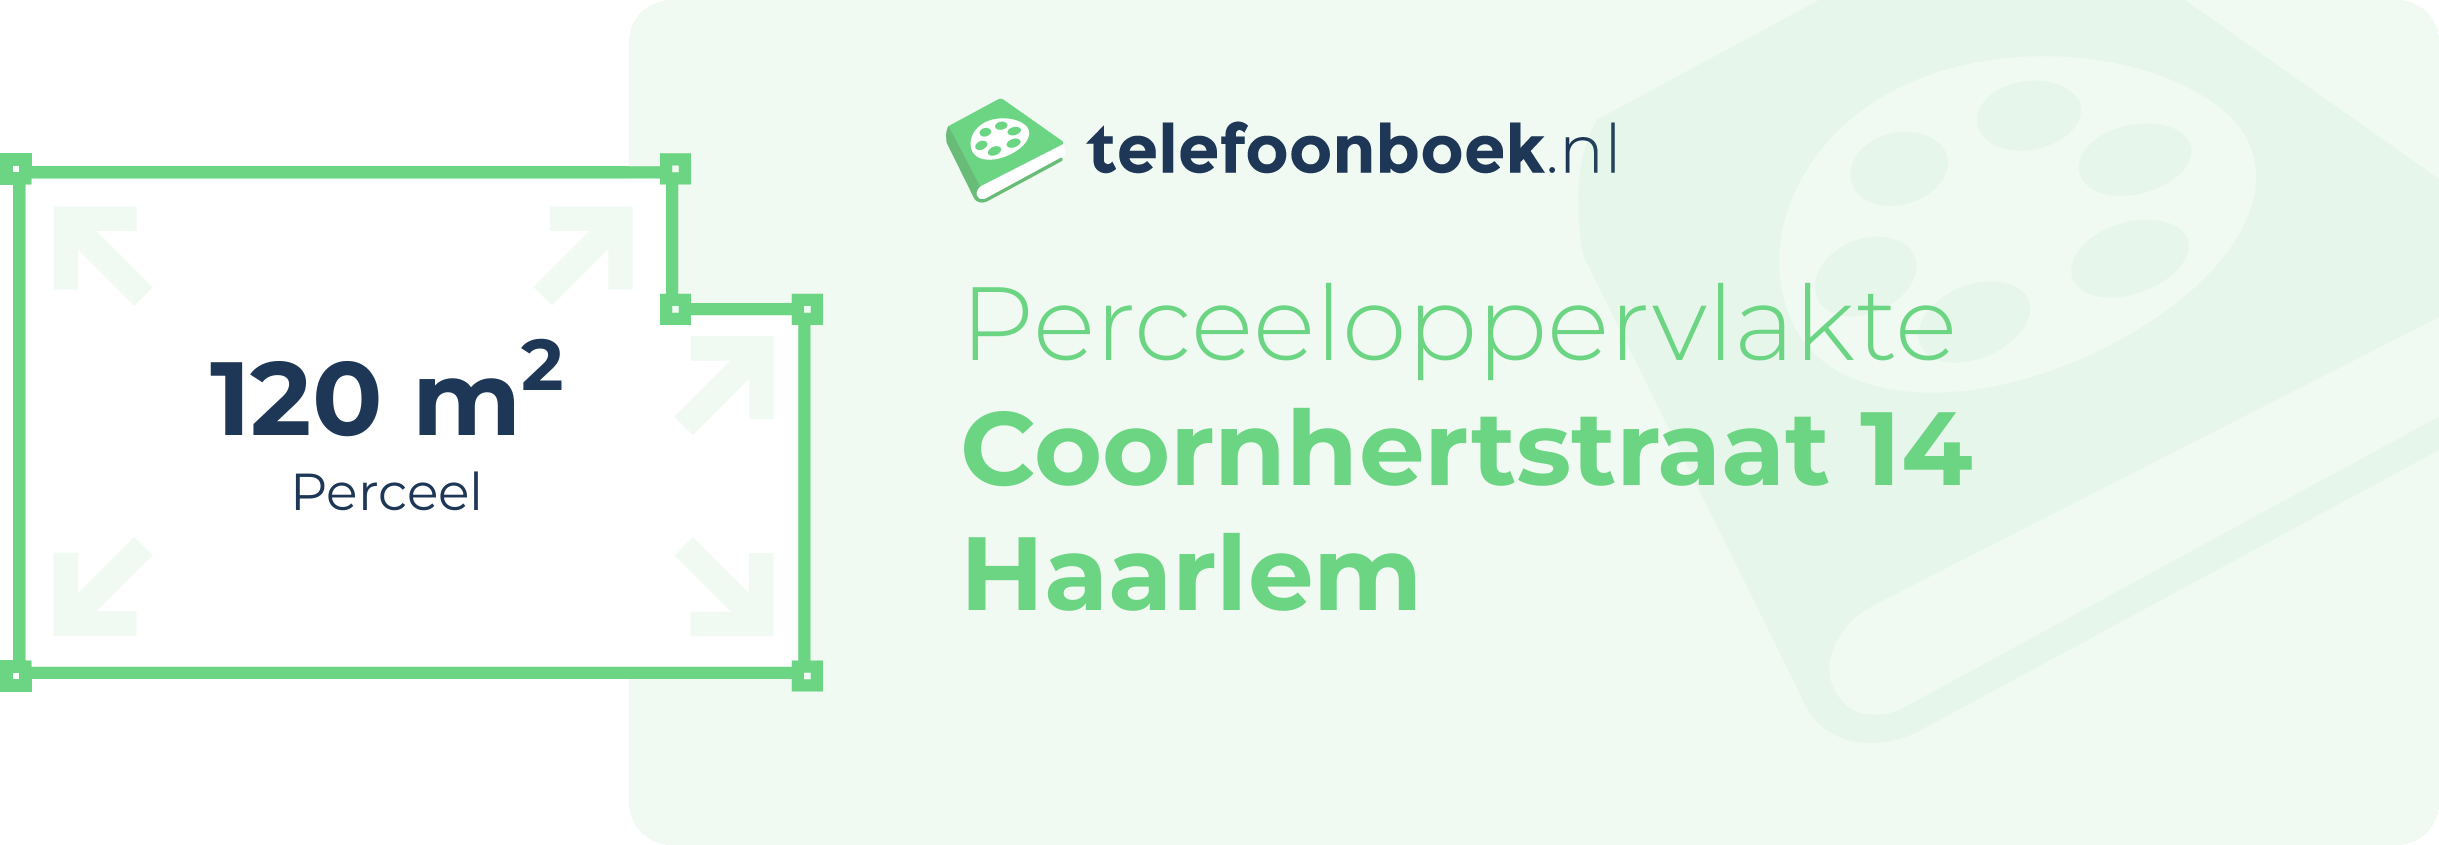 Perceeloppervlakte Coornhertstraat 14 Haarlem